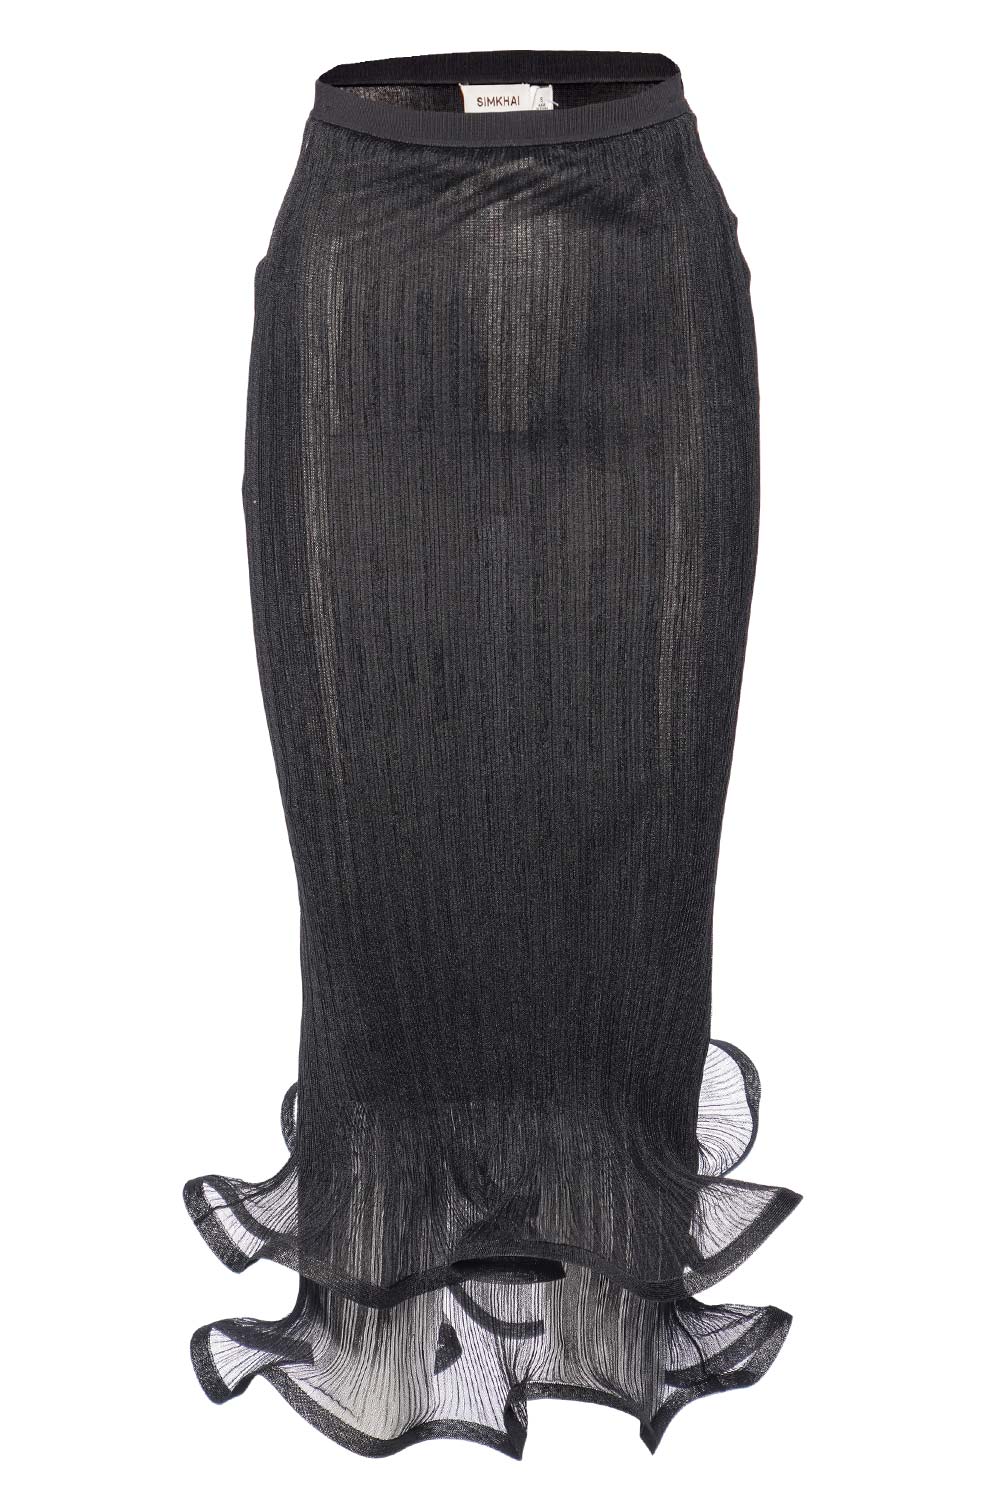 SIMKHAI Kelso Pleated Black Ruffled Midi Skirt